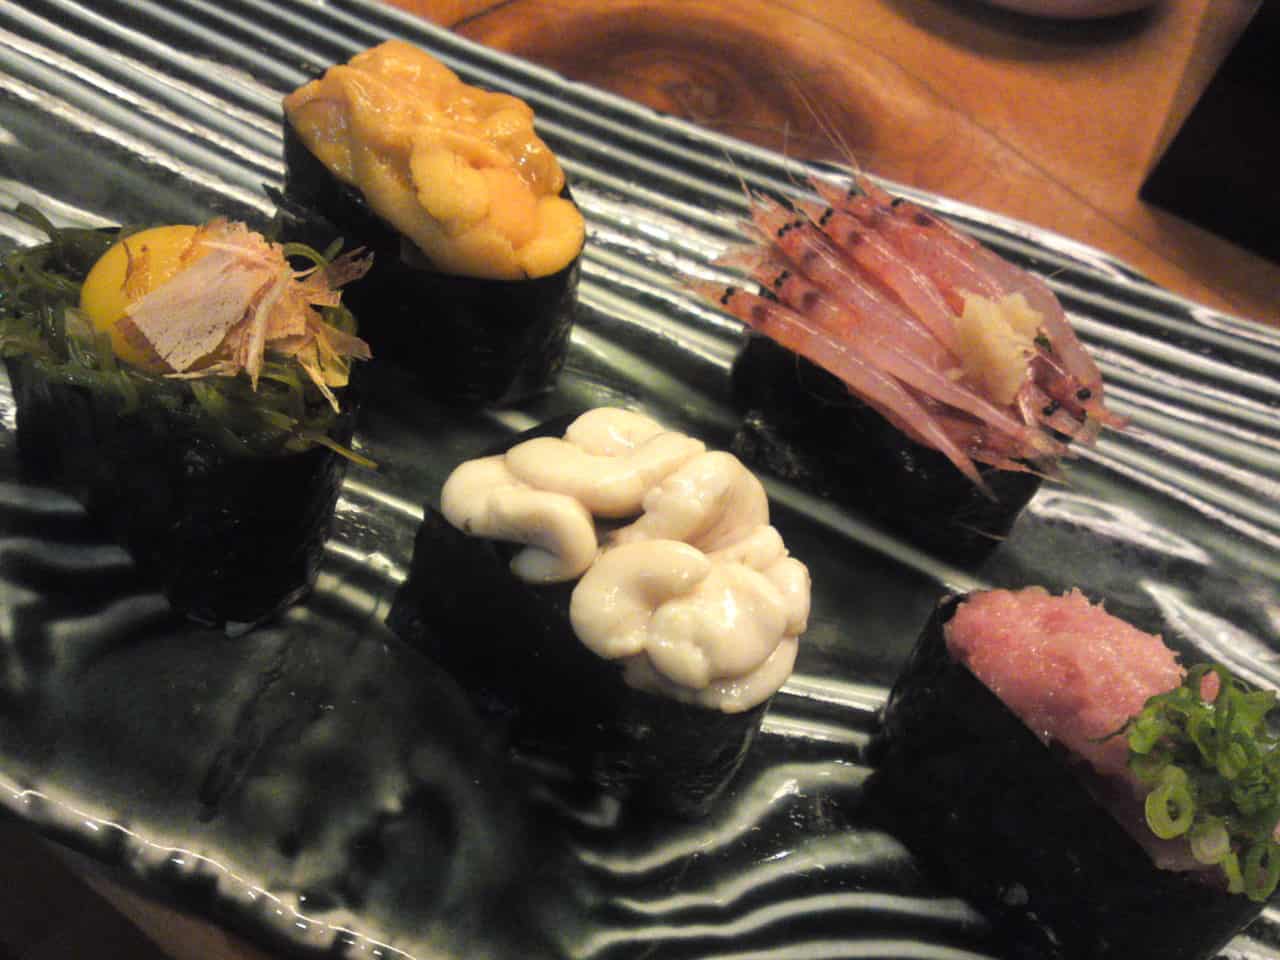 From top and left: “Uni/Sea Urchin”, “Sakura ebi/Cherry shrimps), “Uzura/Quail egg” with seaweed and dry bonito shavings, “Shirako/male cod milt”, and “Negitoro/Grated tuna” gunkan!